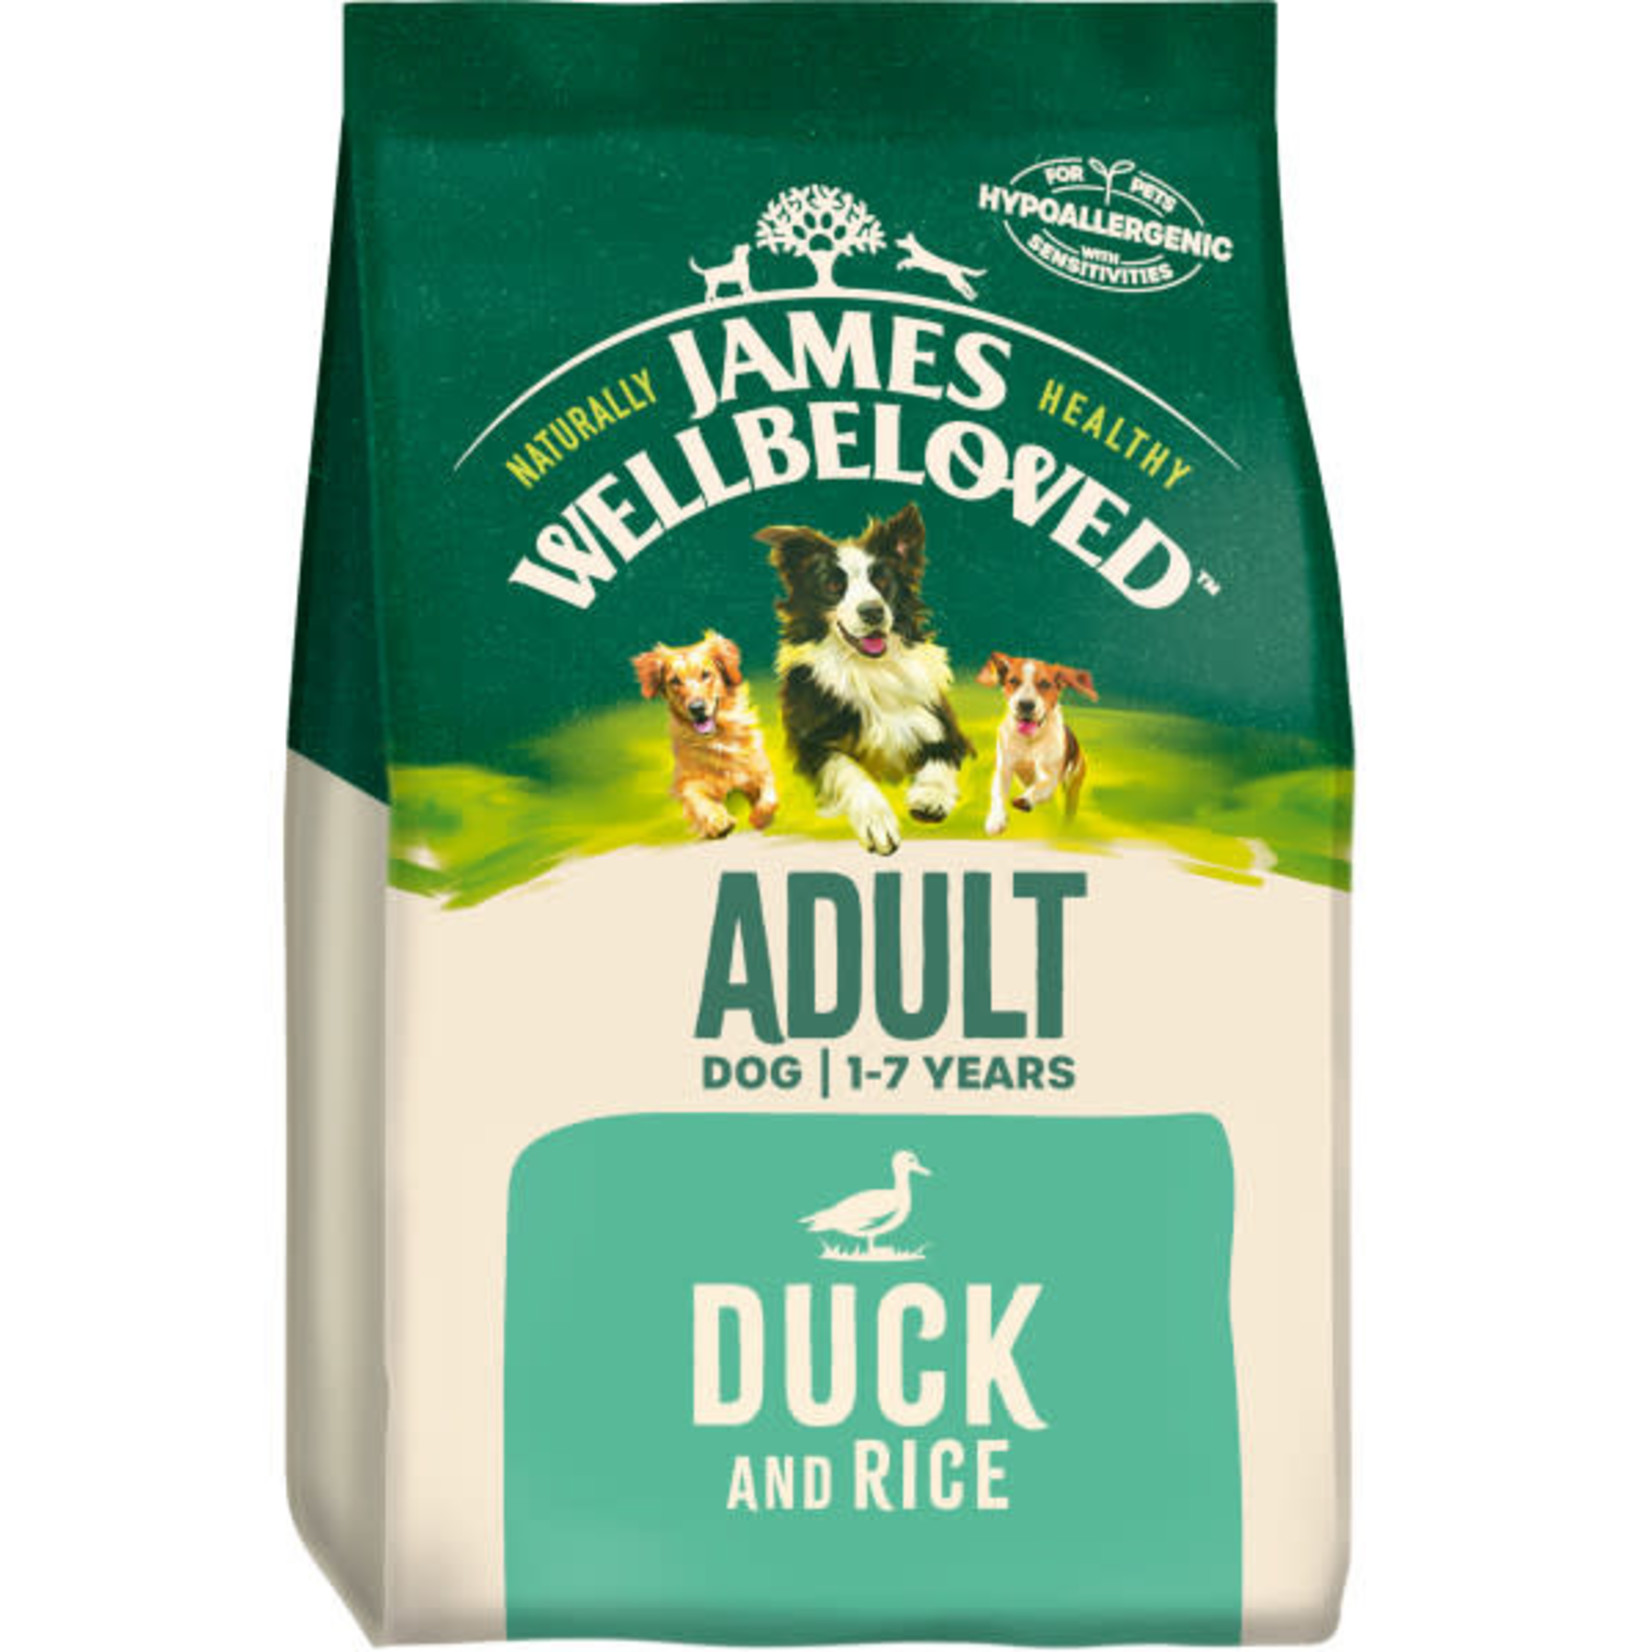 James Wellbeloved Adult Dog Dry Food, Duck & Rice